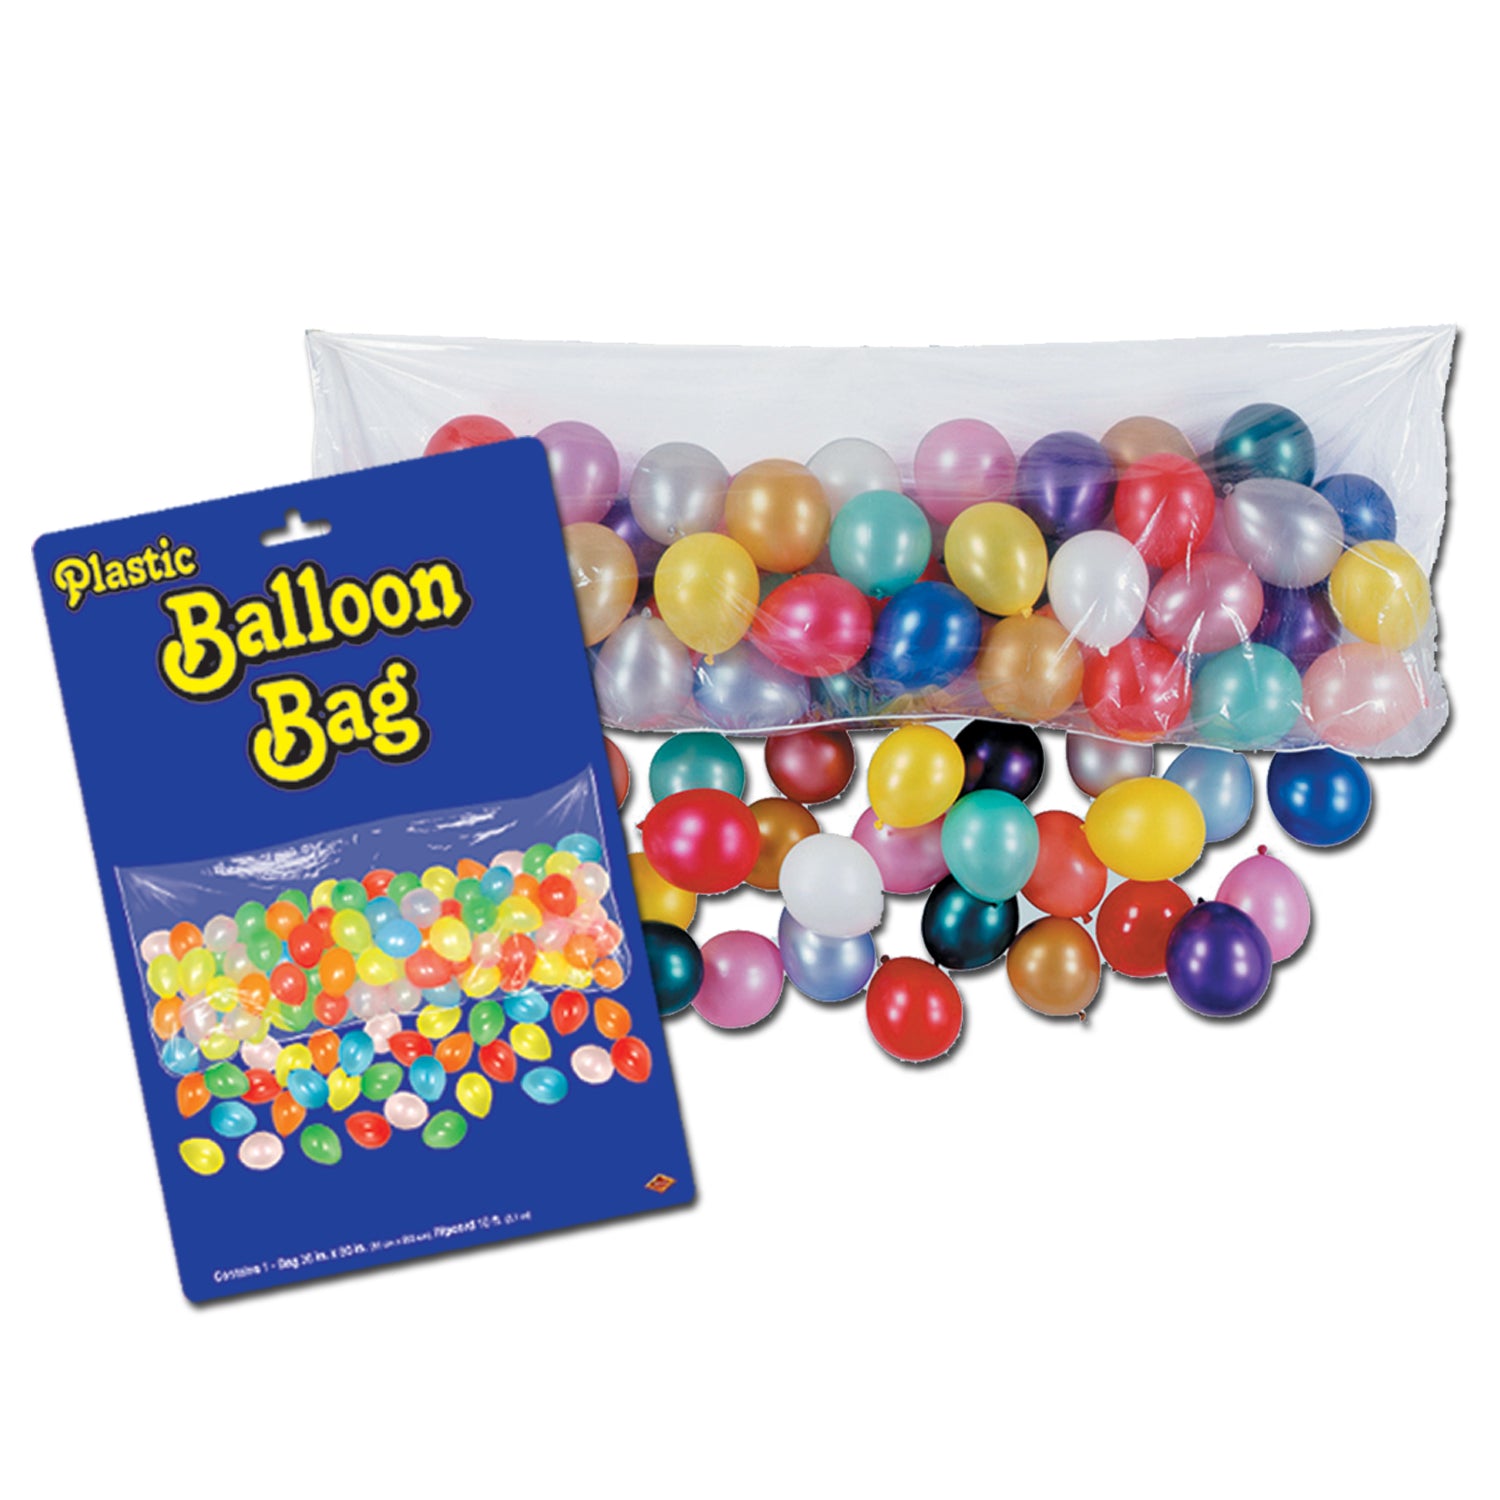 Bolsa para soltar globos de 36" x 80" - Lanzamiento de globos de celebración